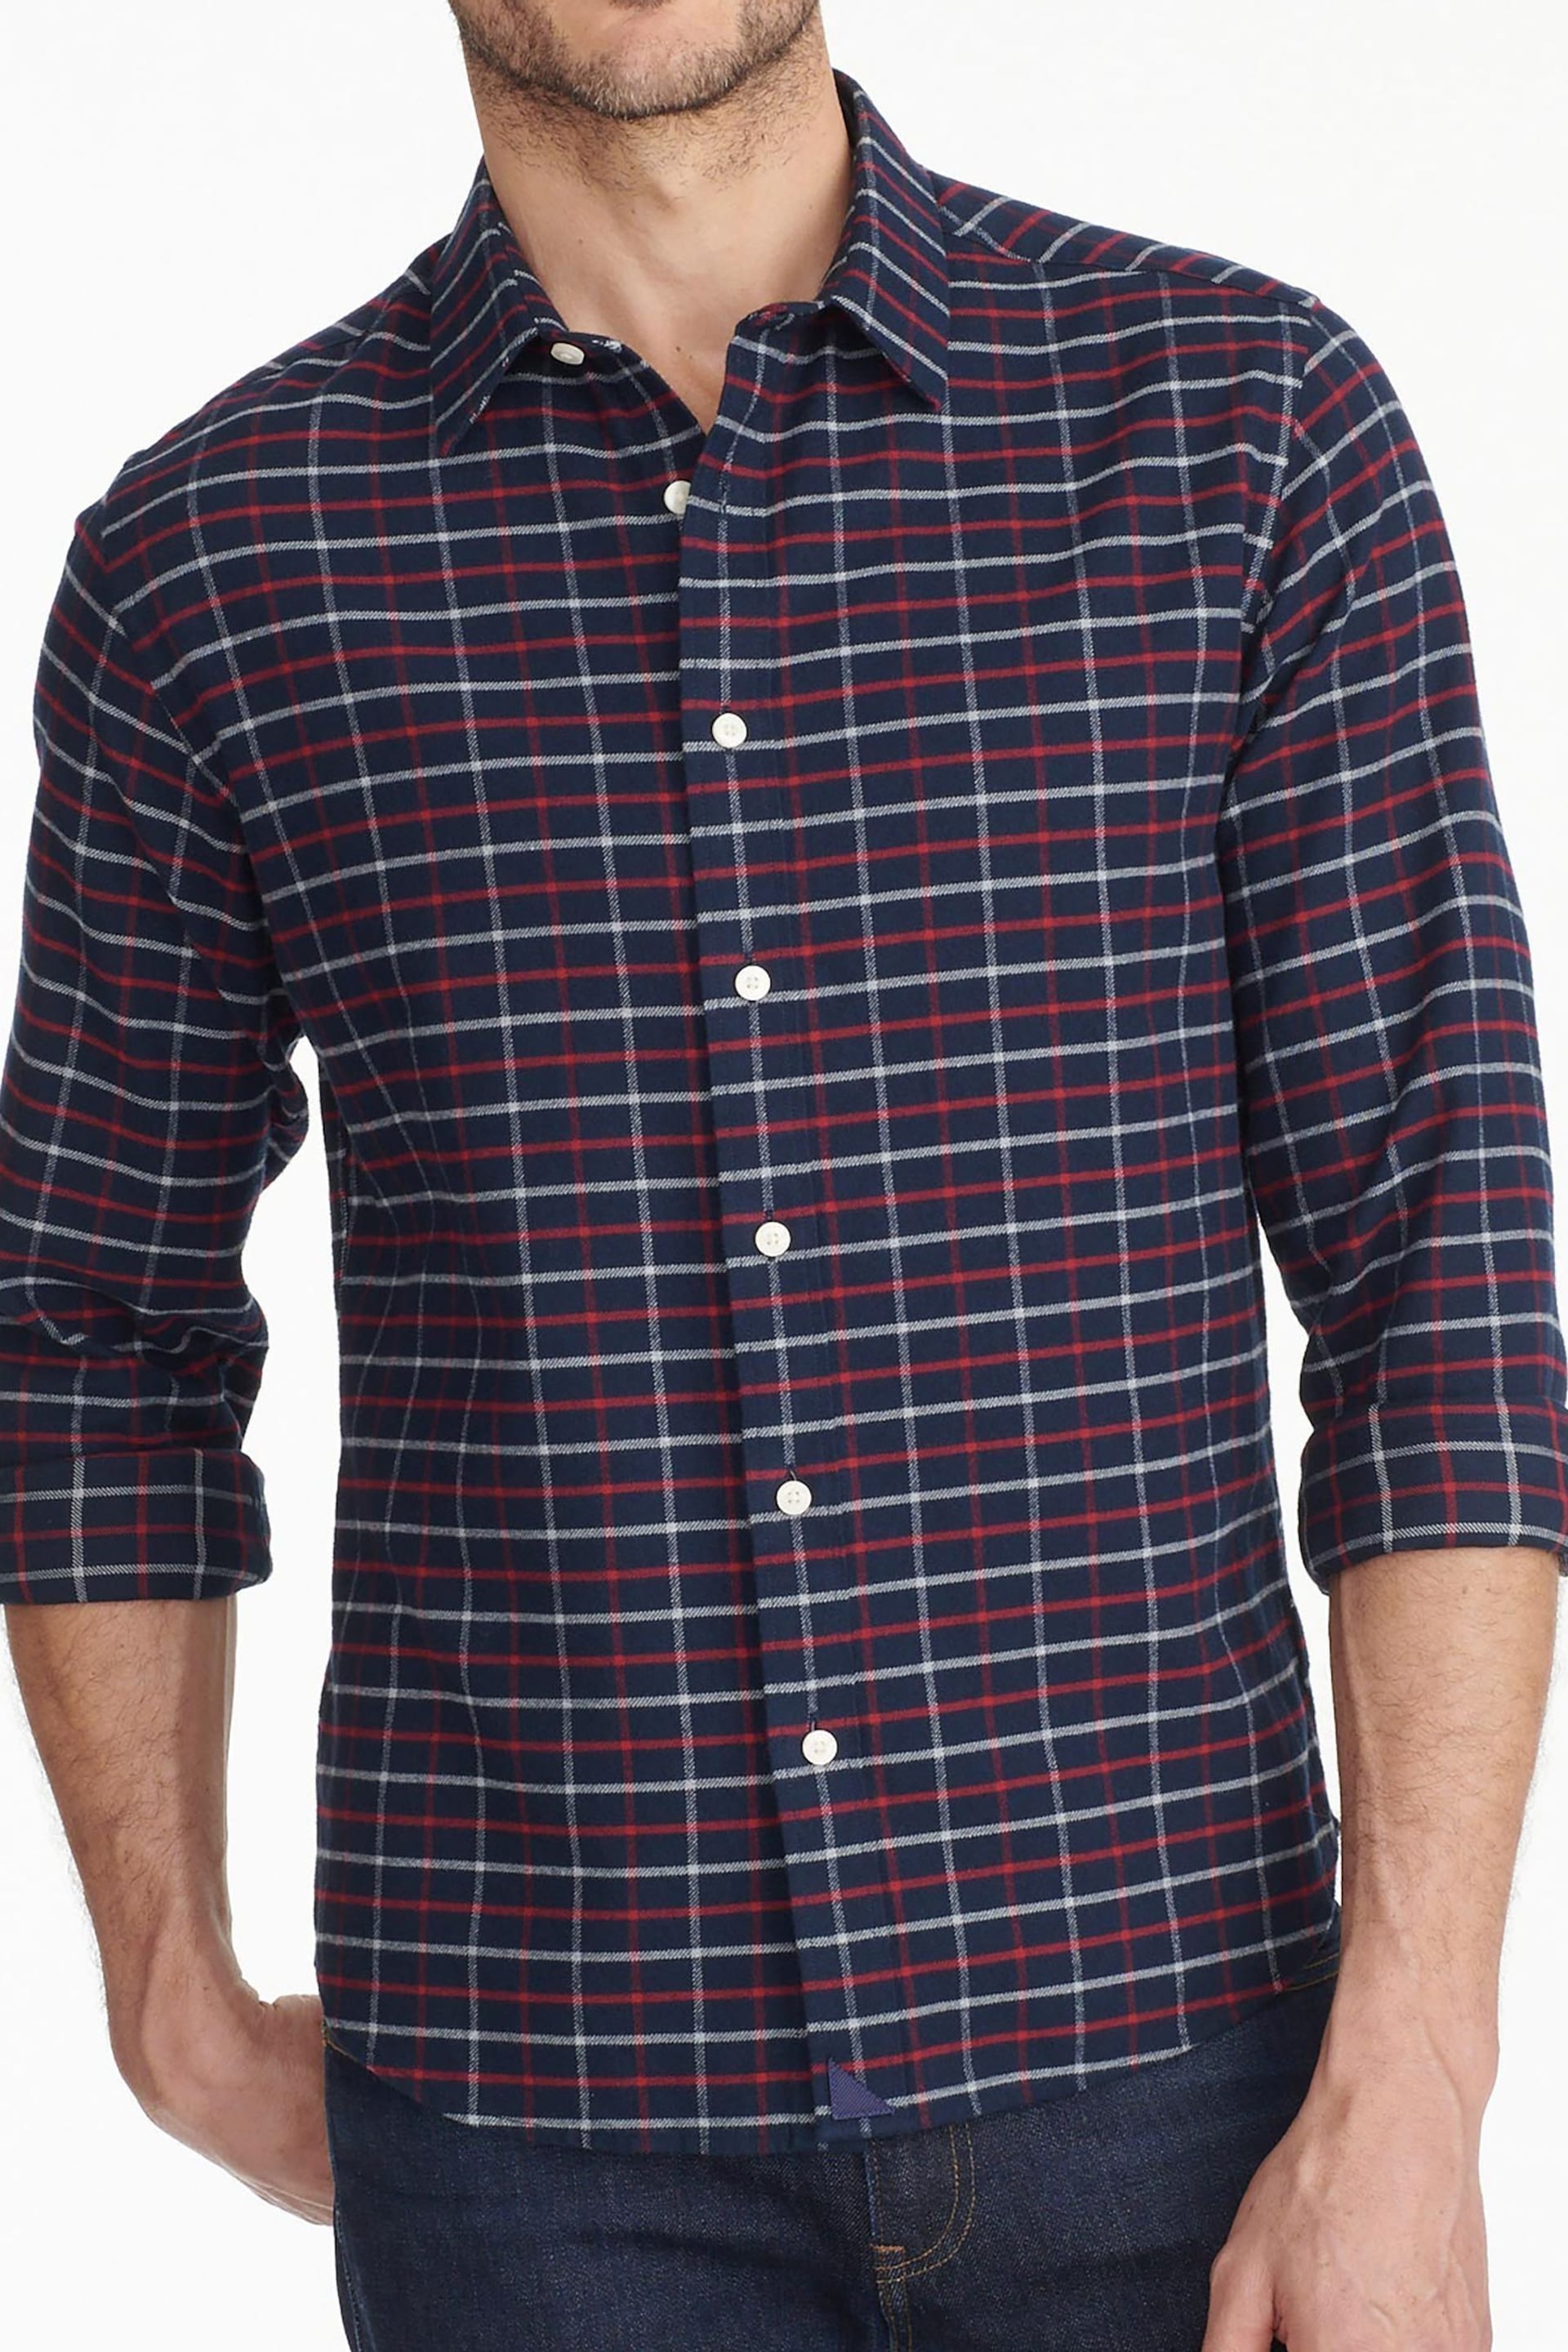 UNTUCKit Blue Dark Flannel Regular Fit Bozeman Shirt - Image 3 of 6